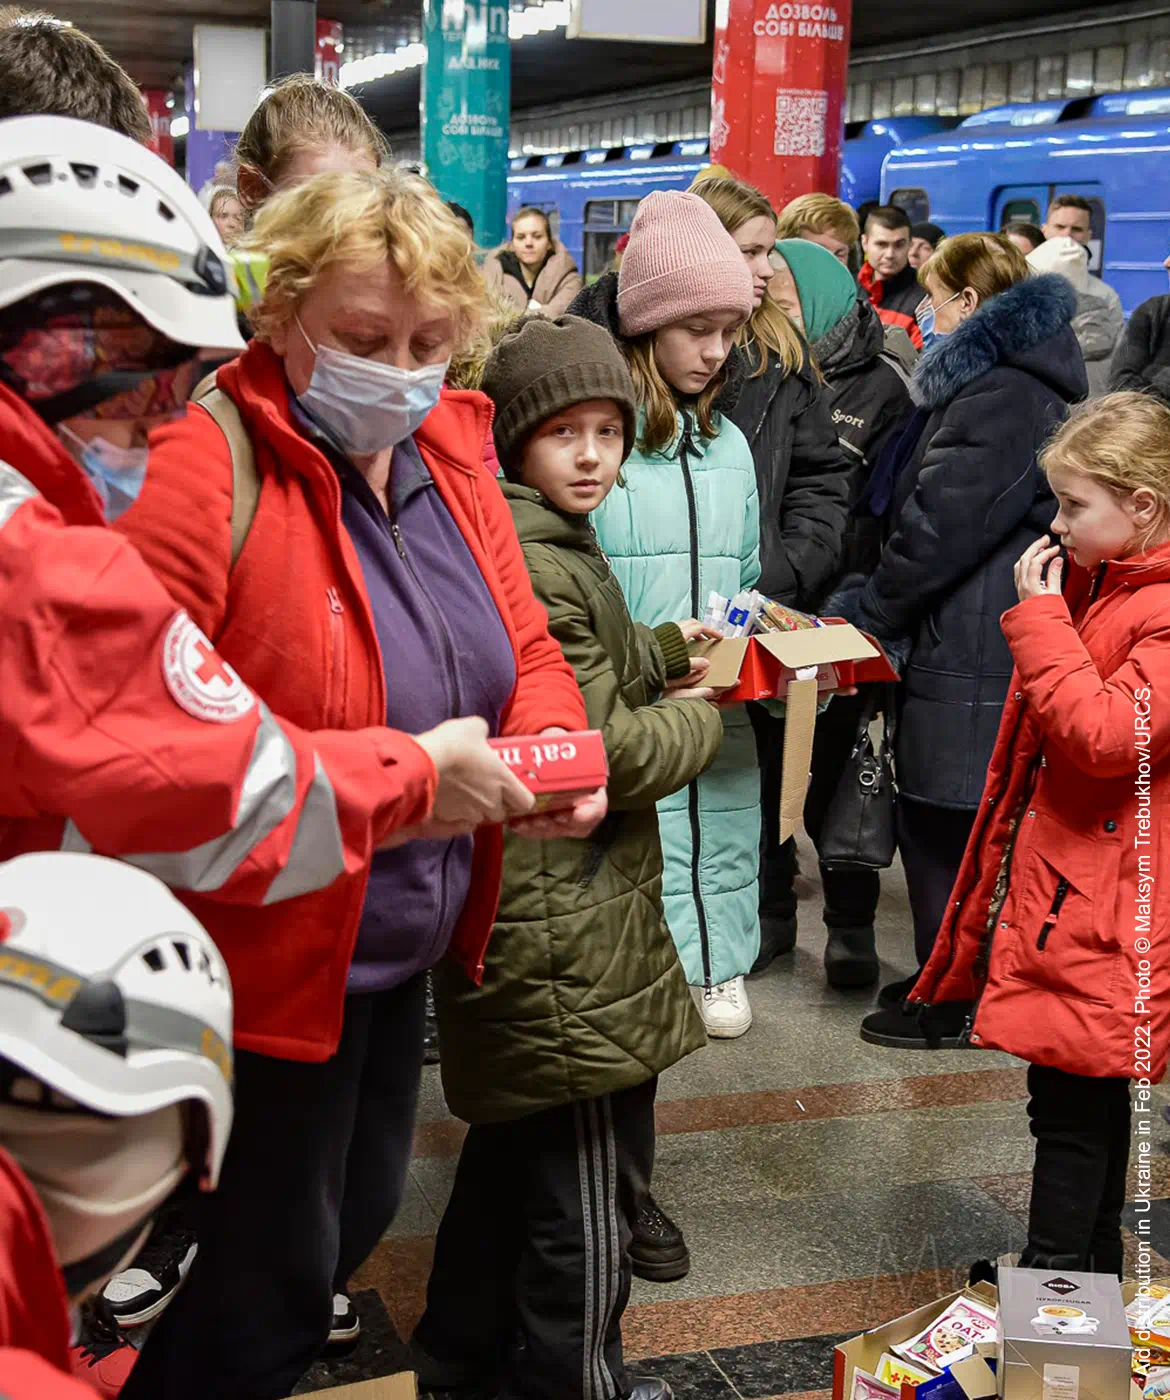 Red Cross Ukraine Crisis Appeal